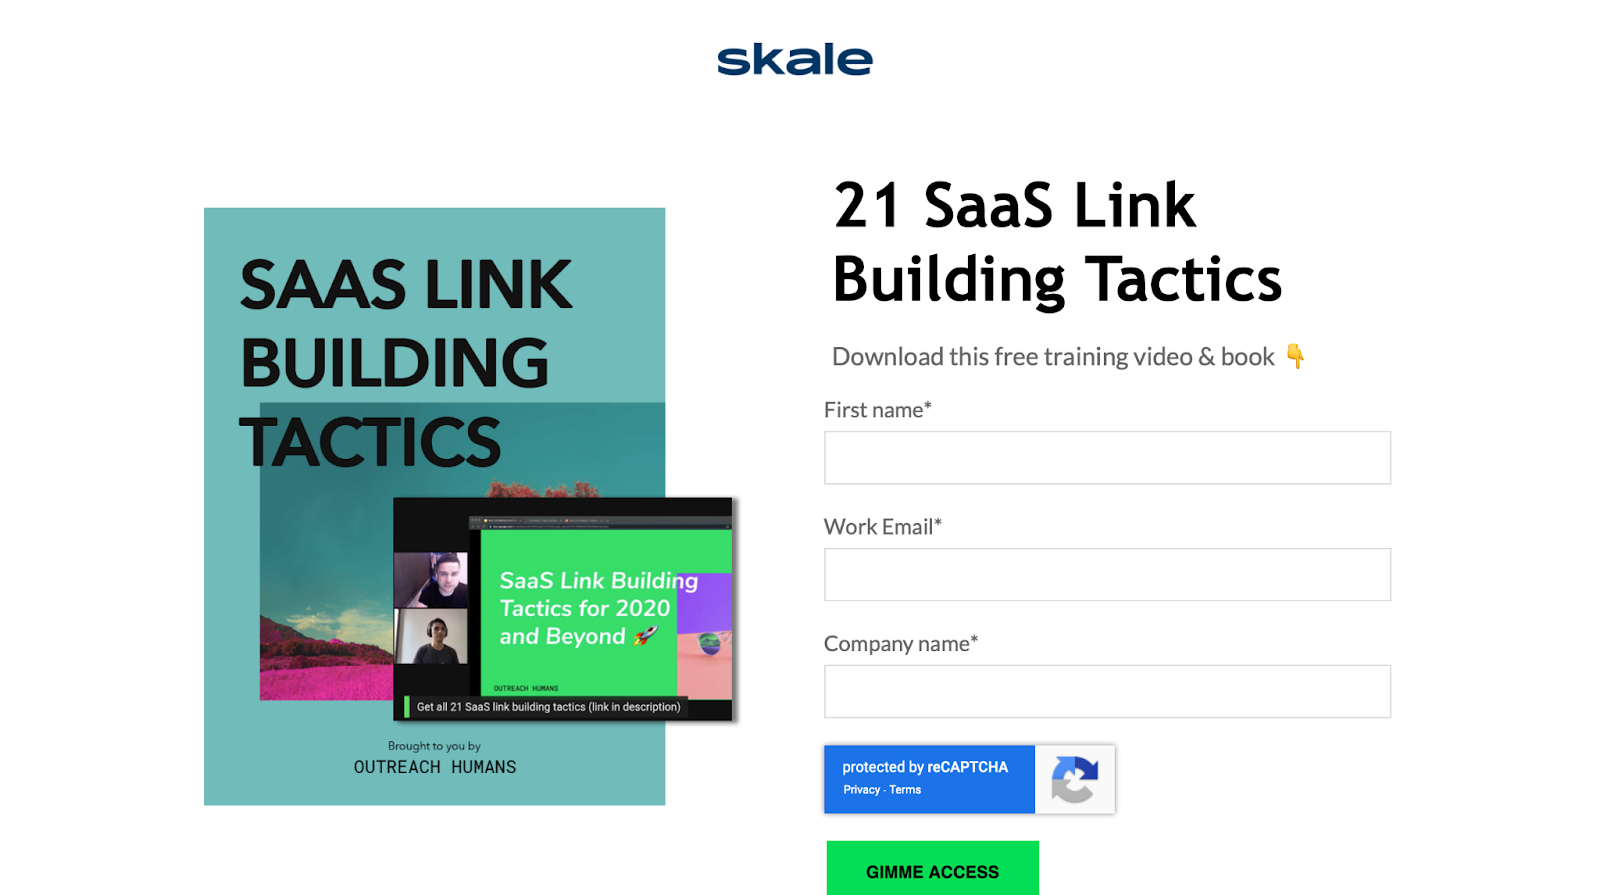 SaaS Link Building Tactics Ebook